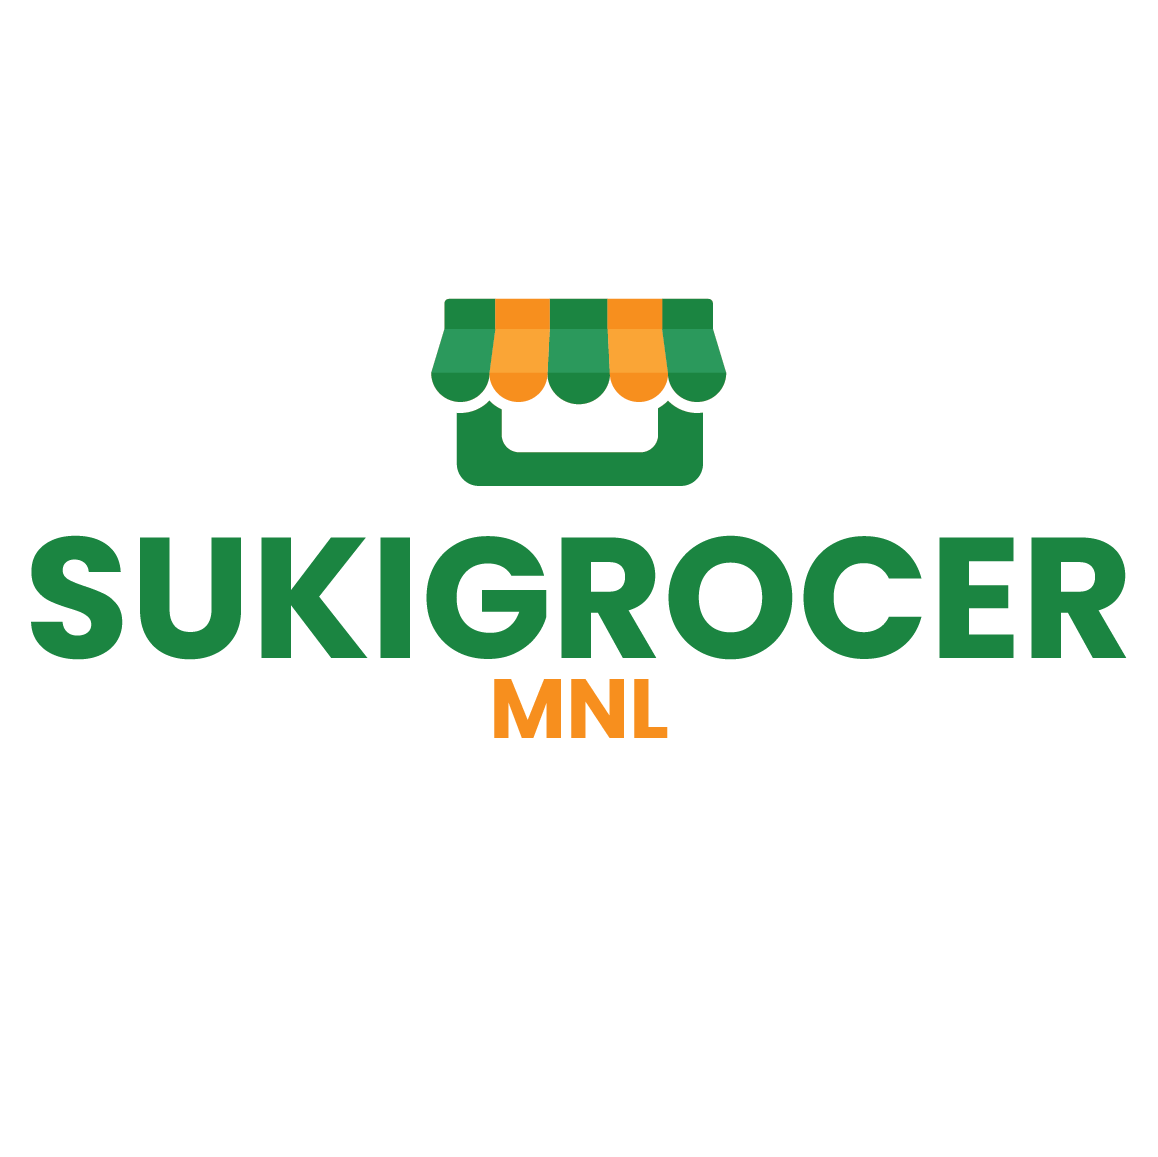 SukigrocerMNL